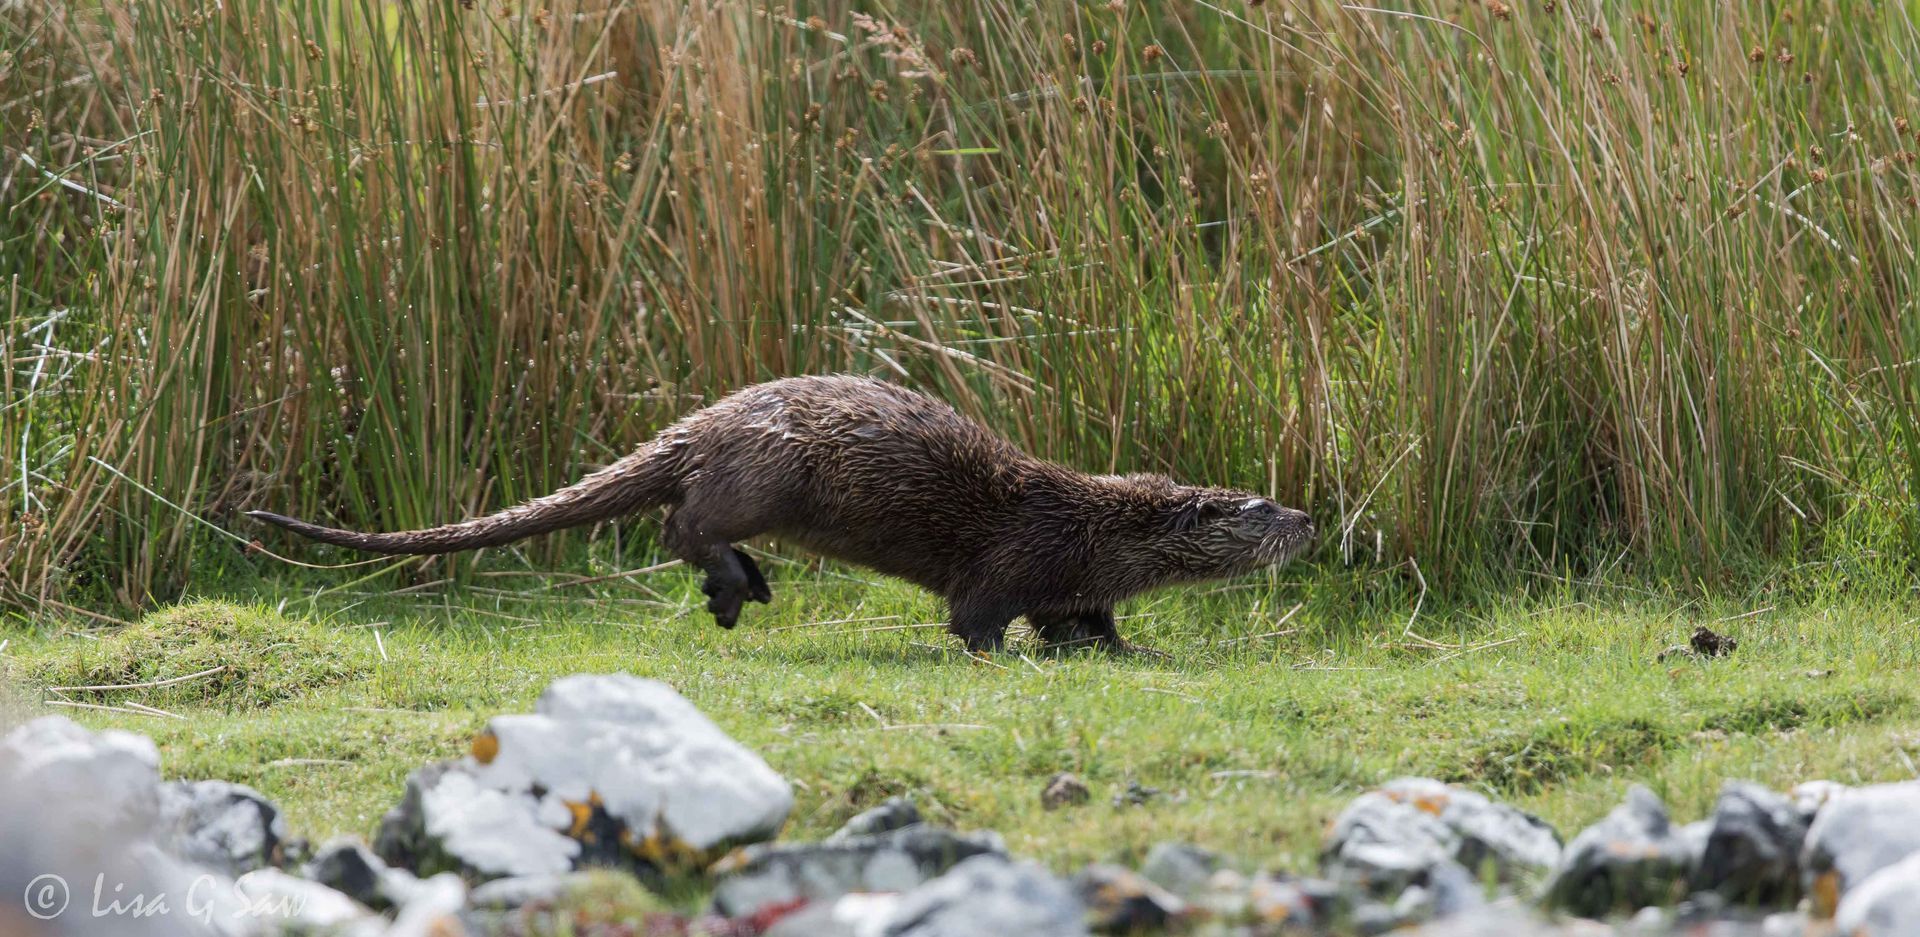 Juvenile River Otter running on the grass